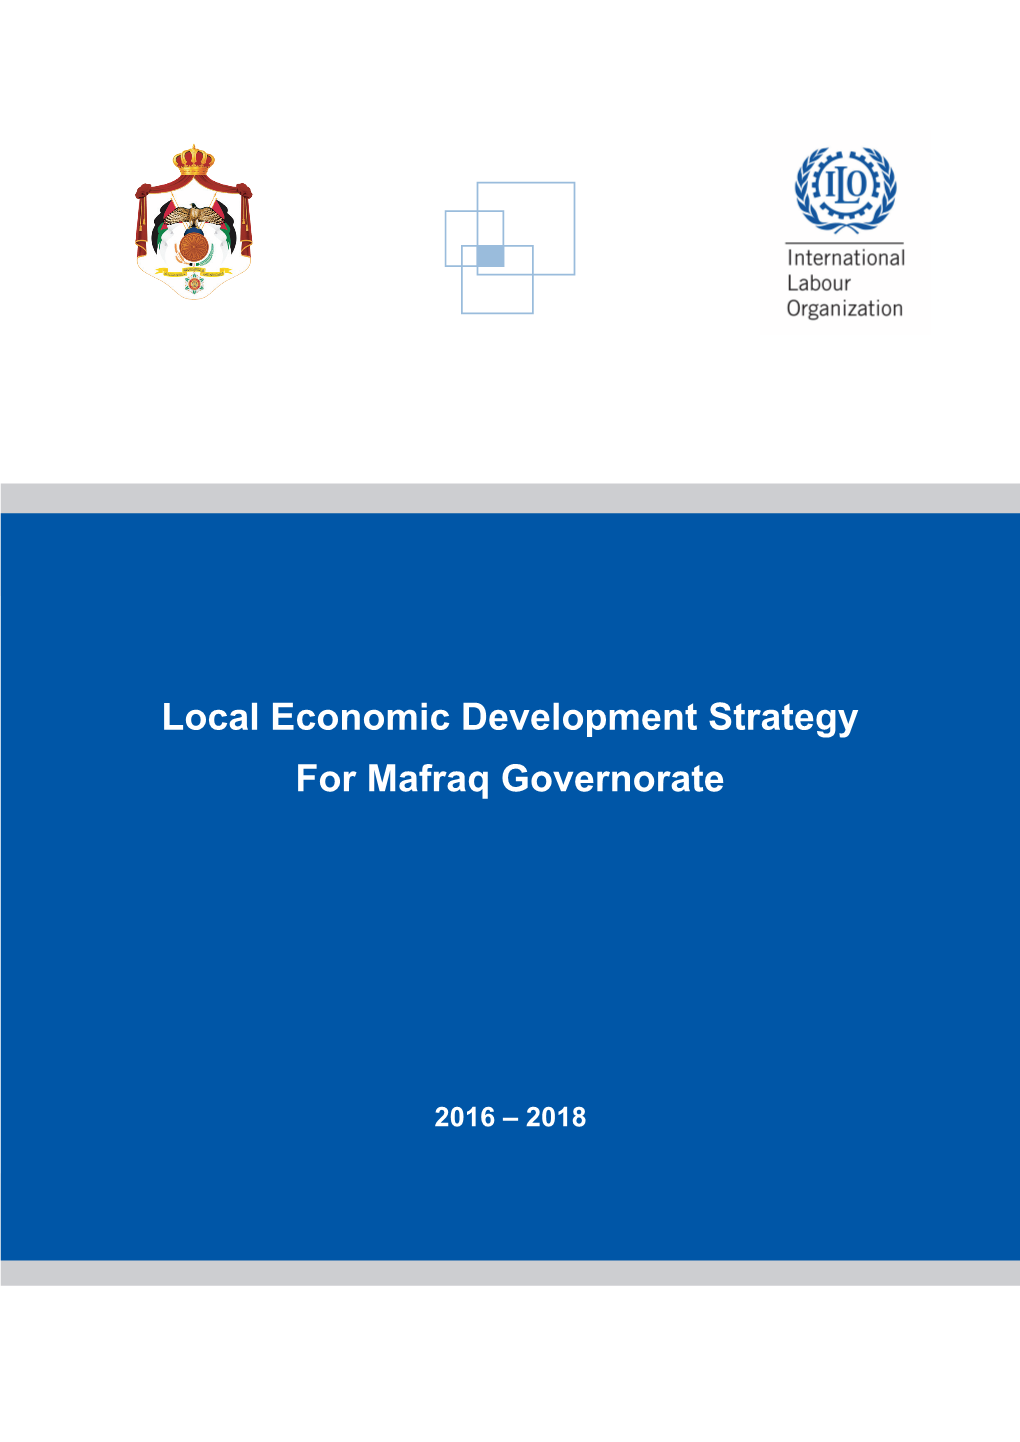 Local Economic Development Strategy for Mafraq Governorate